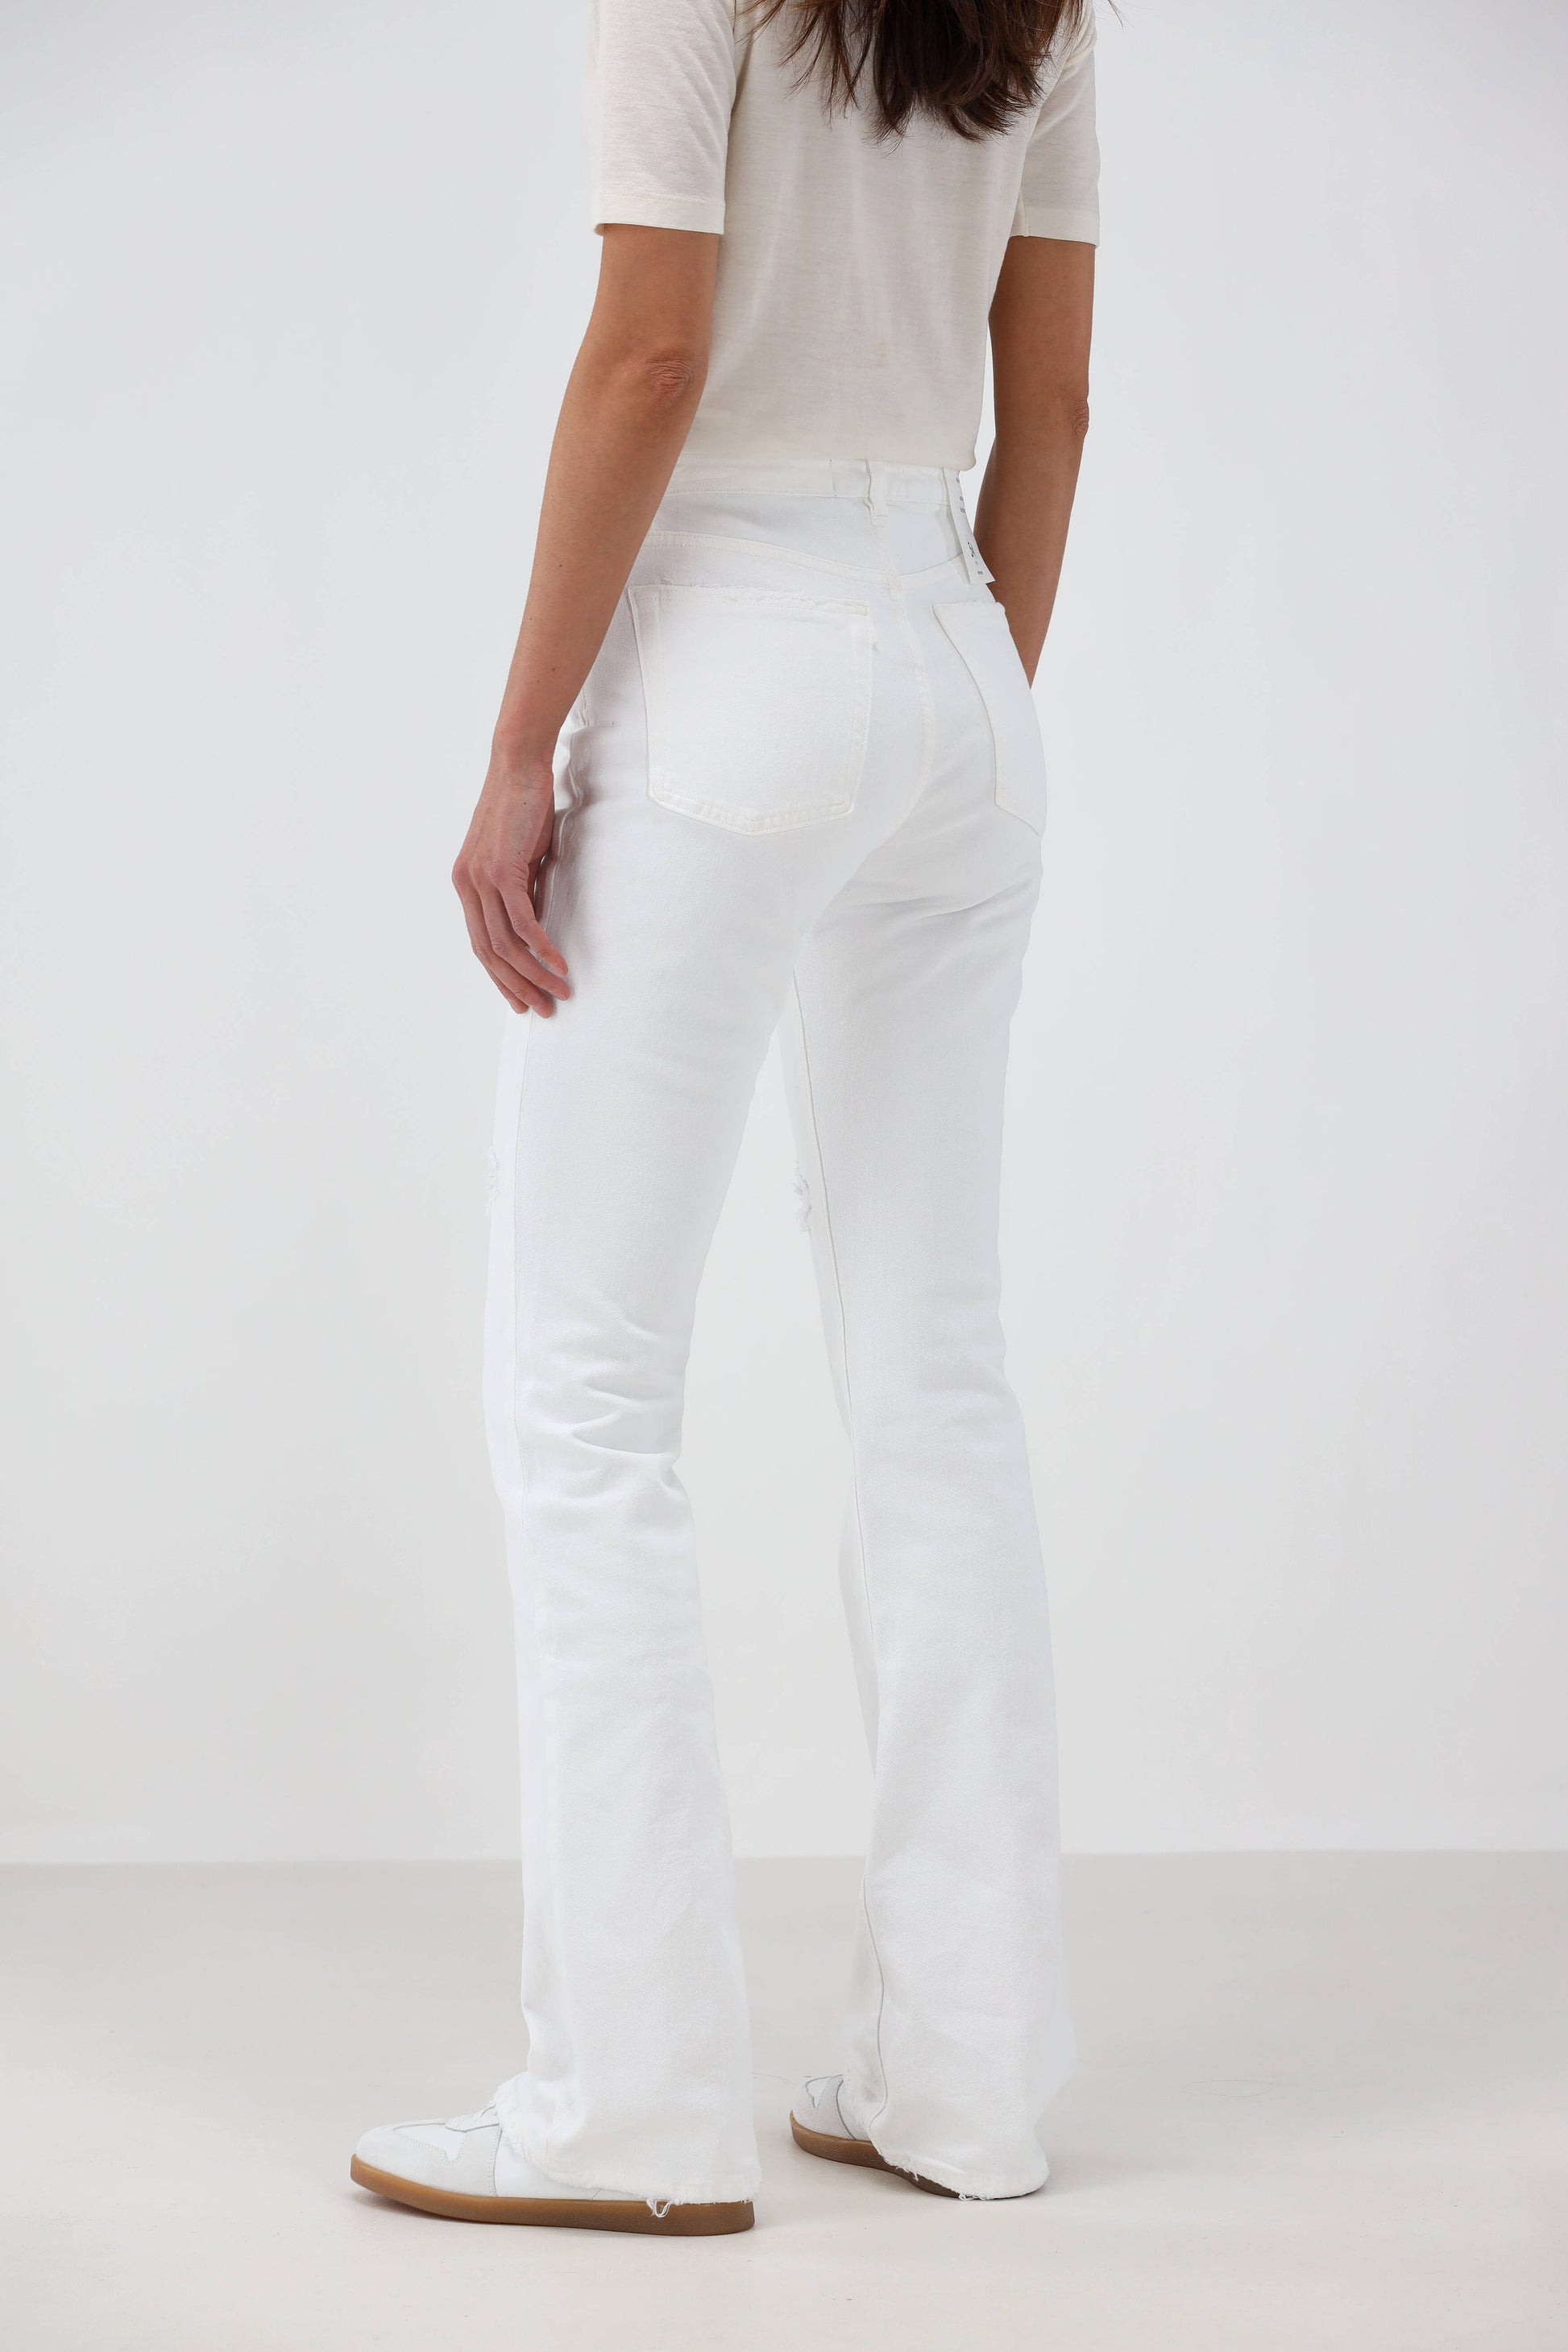 Jeans Farrah in Optic White3x1 - Anita Hass